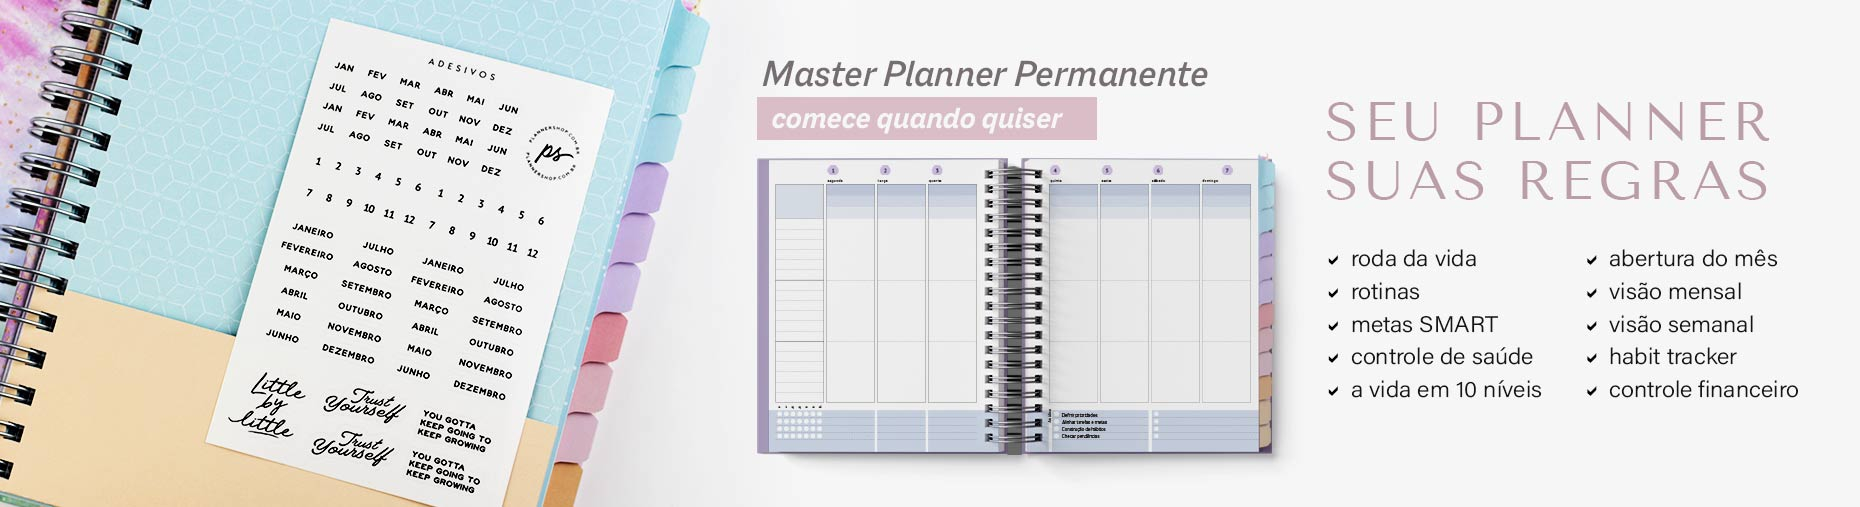 Master Planner Permanente